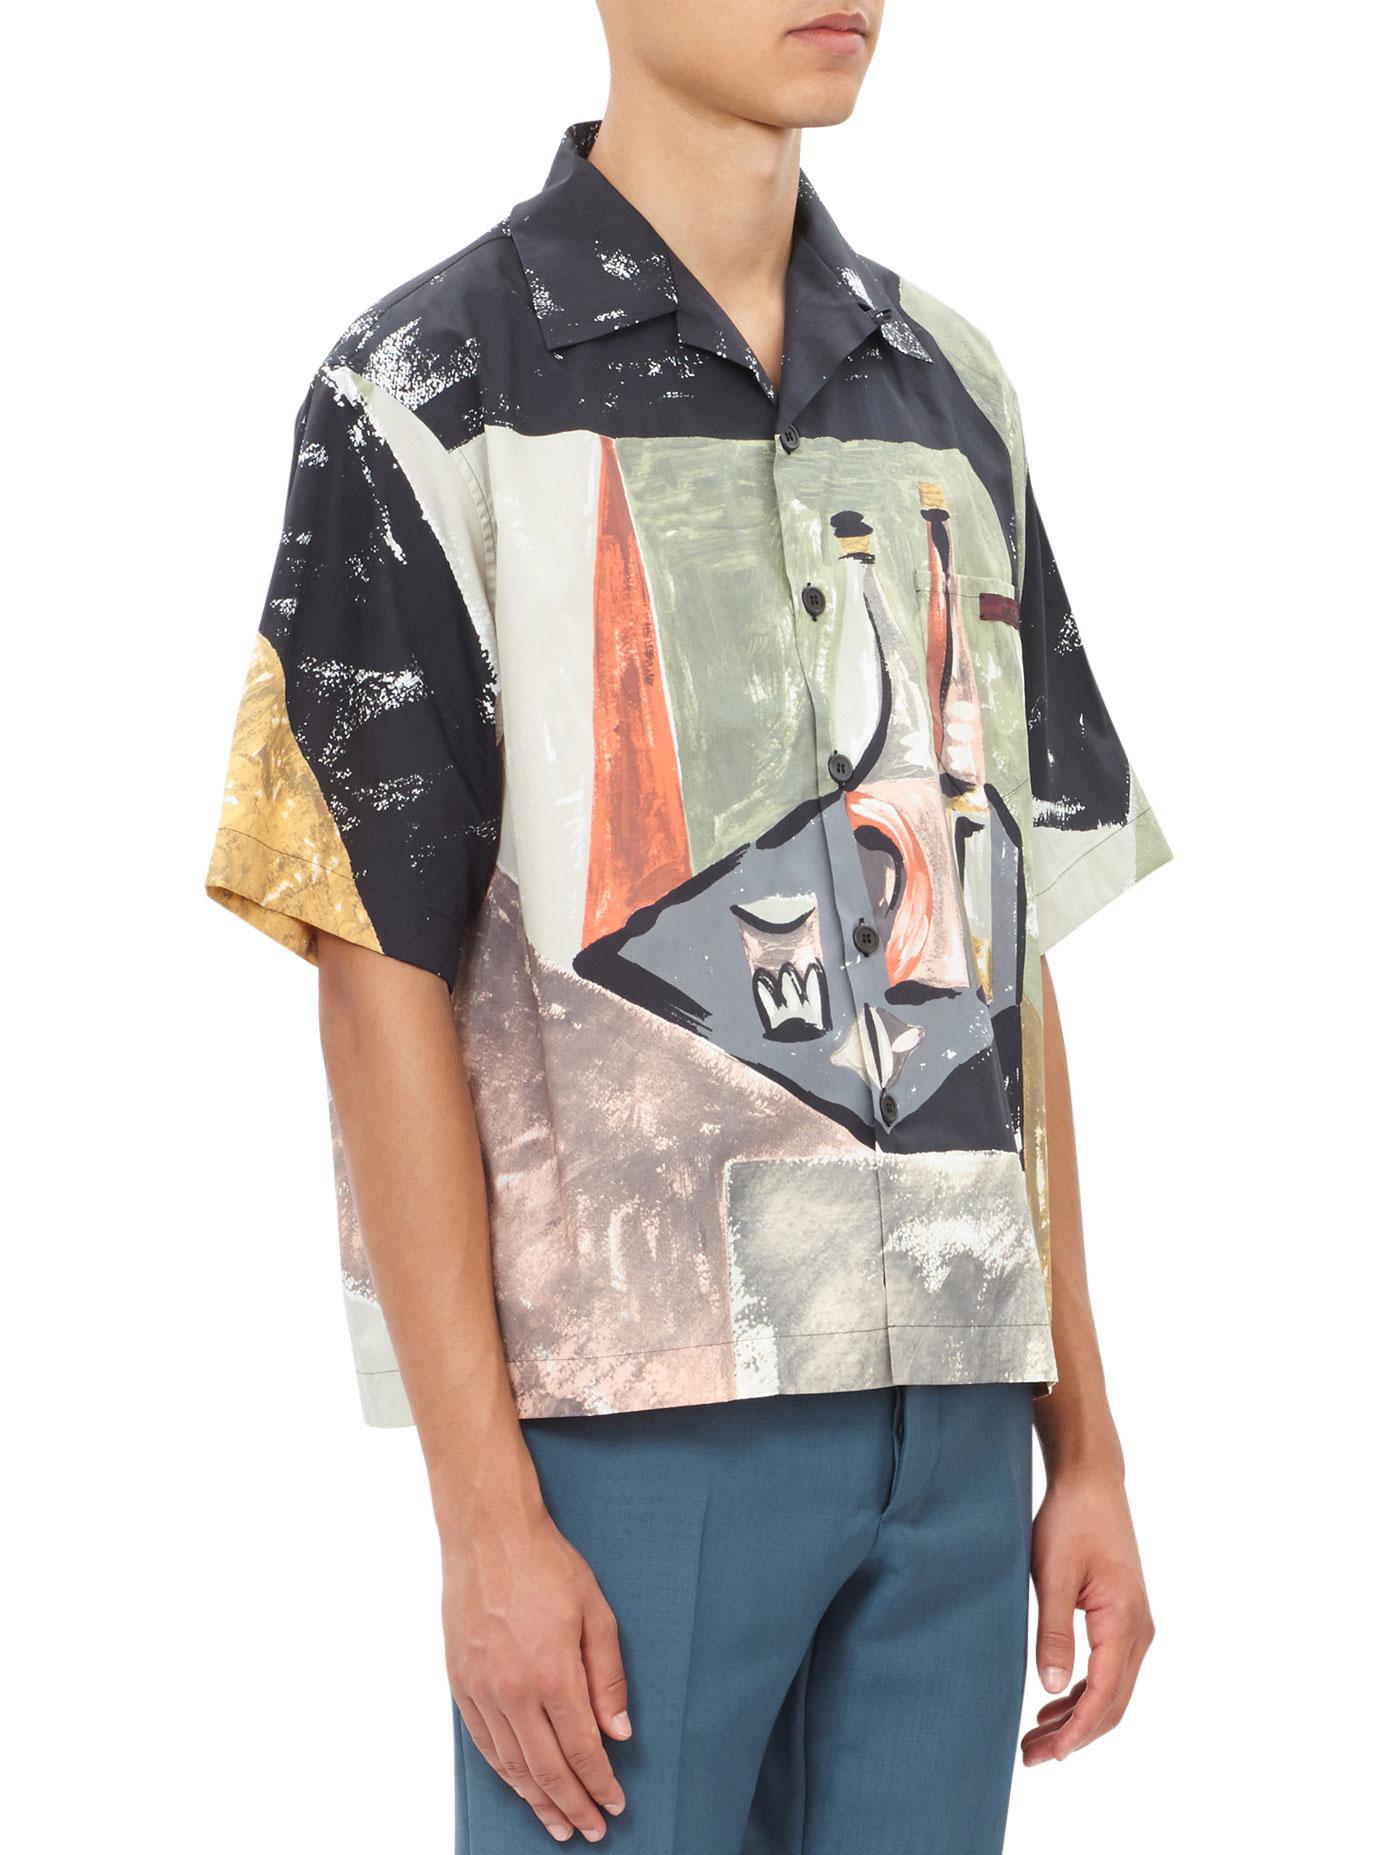 Prada Synthetic Multicolor Art Print Bowling Shirt for Men - Lyst